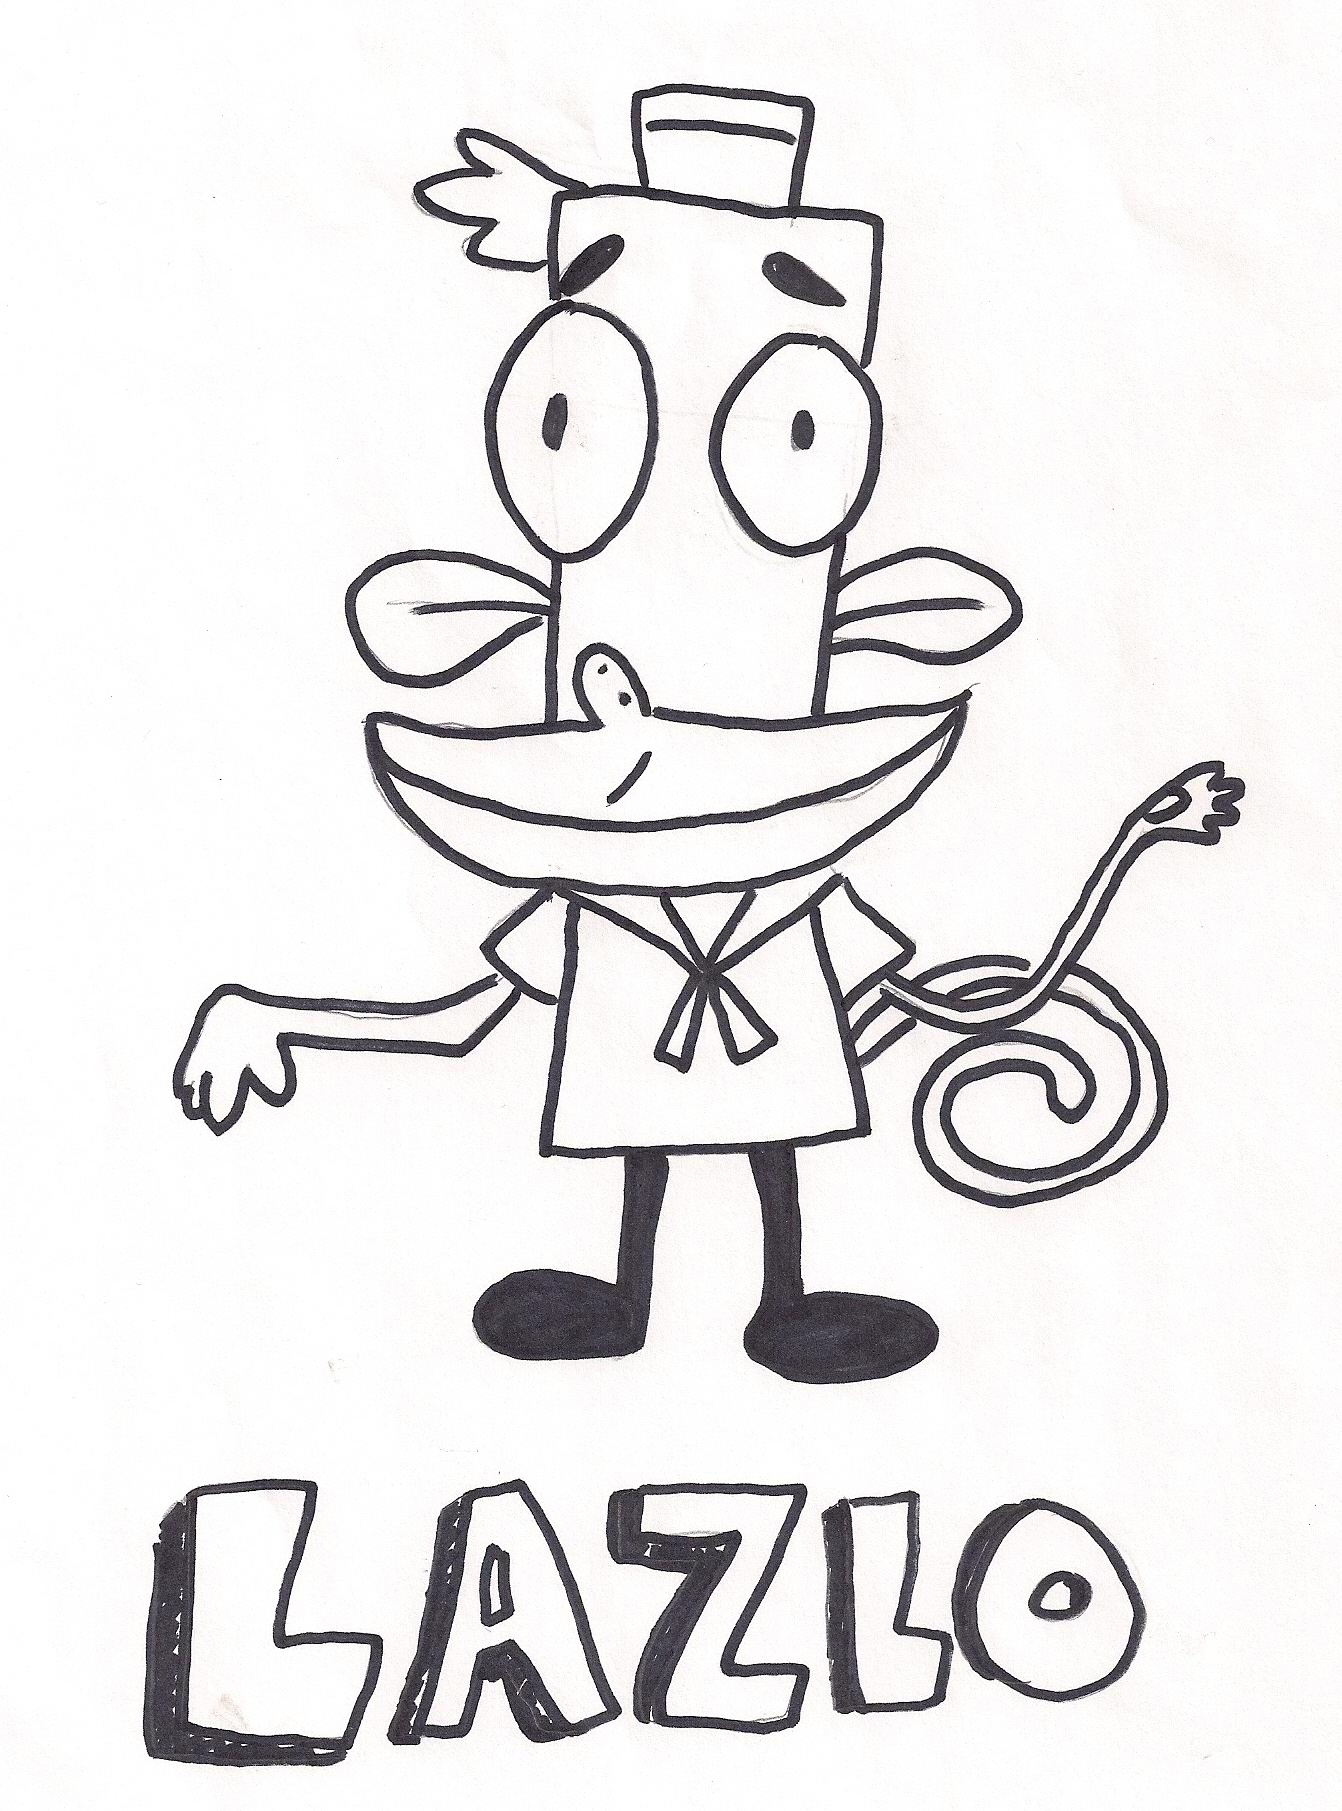 Lazlo by monkeyface200